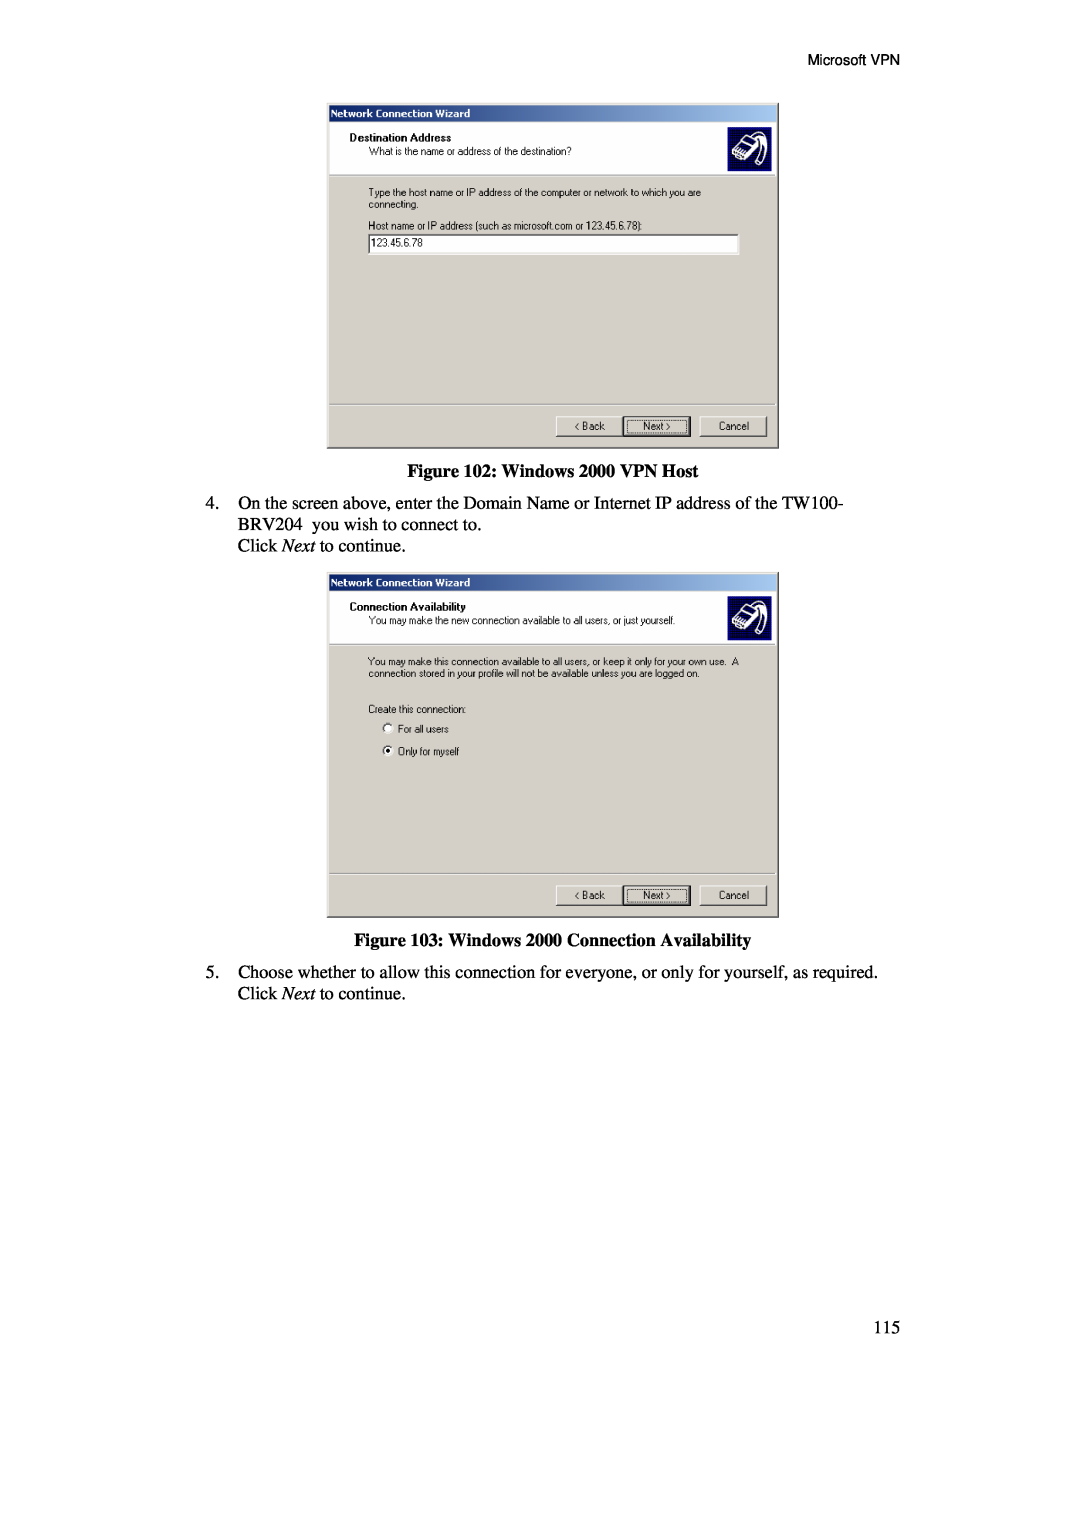 TRENDnet BRV204 manual Windows 2000 VPN Host, Click Next to continue, Windows 2000 Connection Availability, Microsoft VPN 